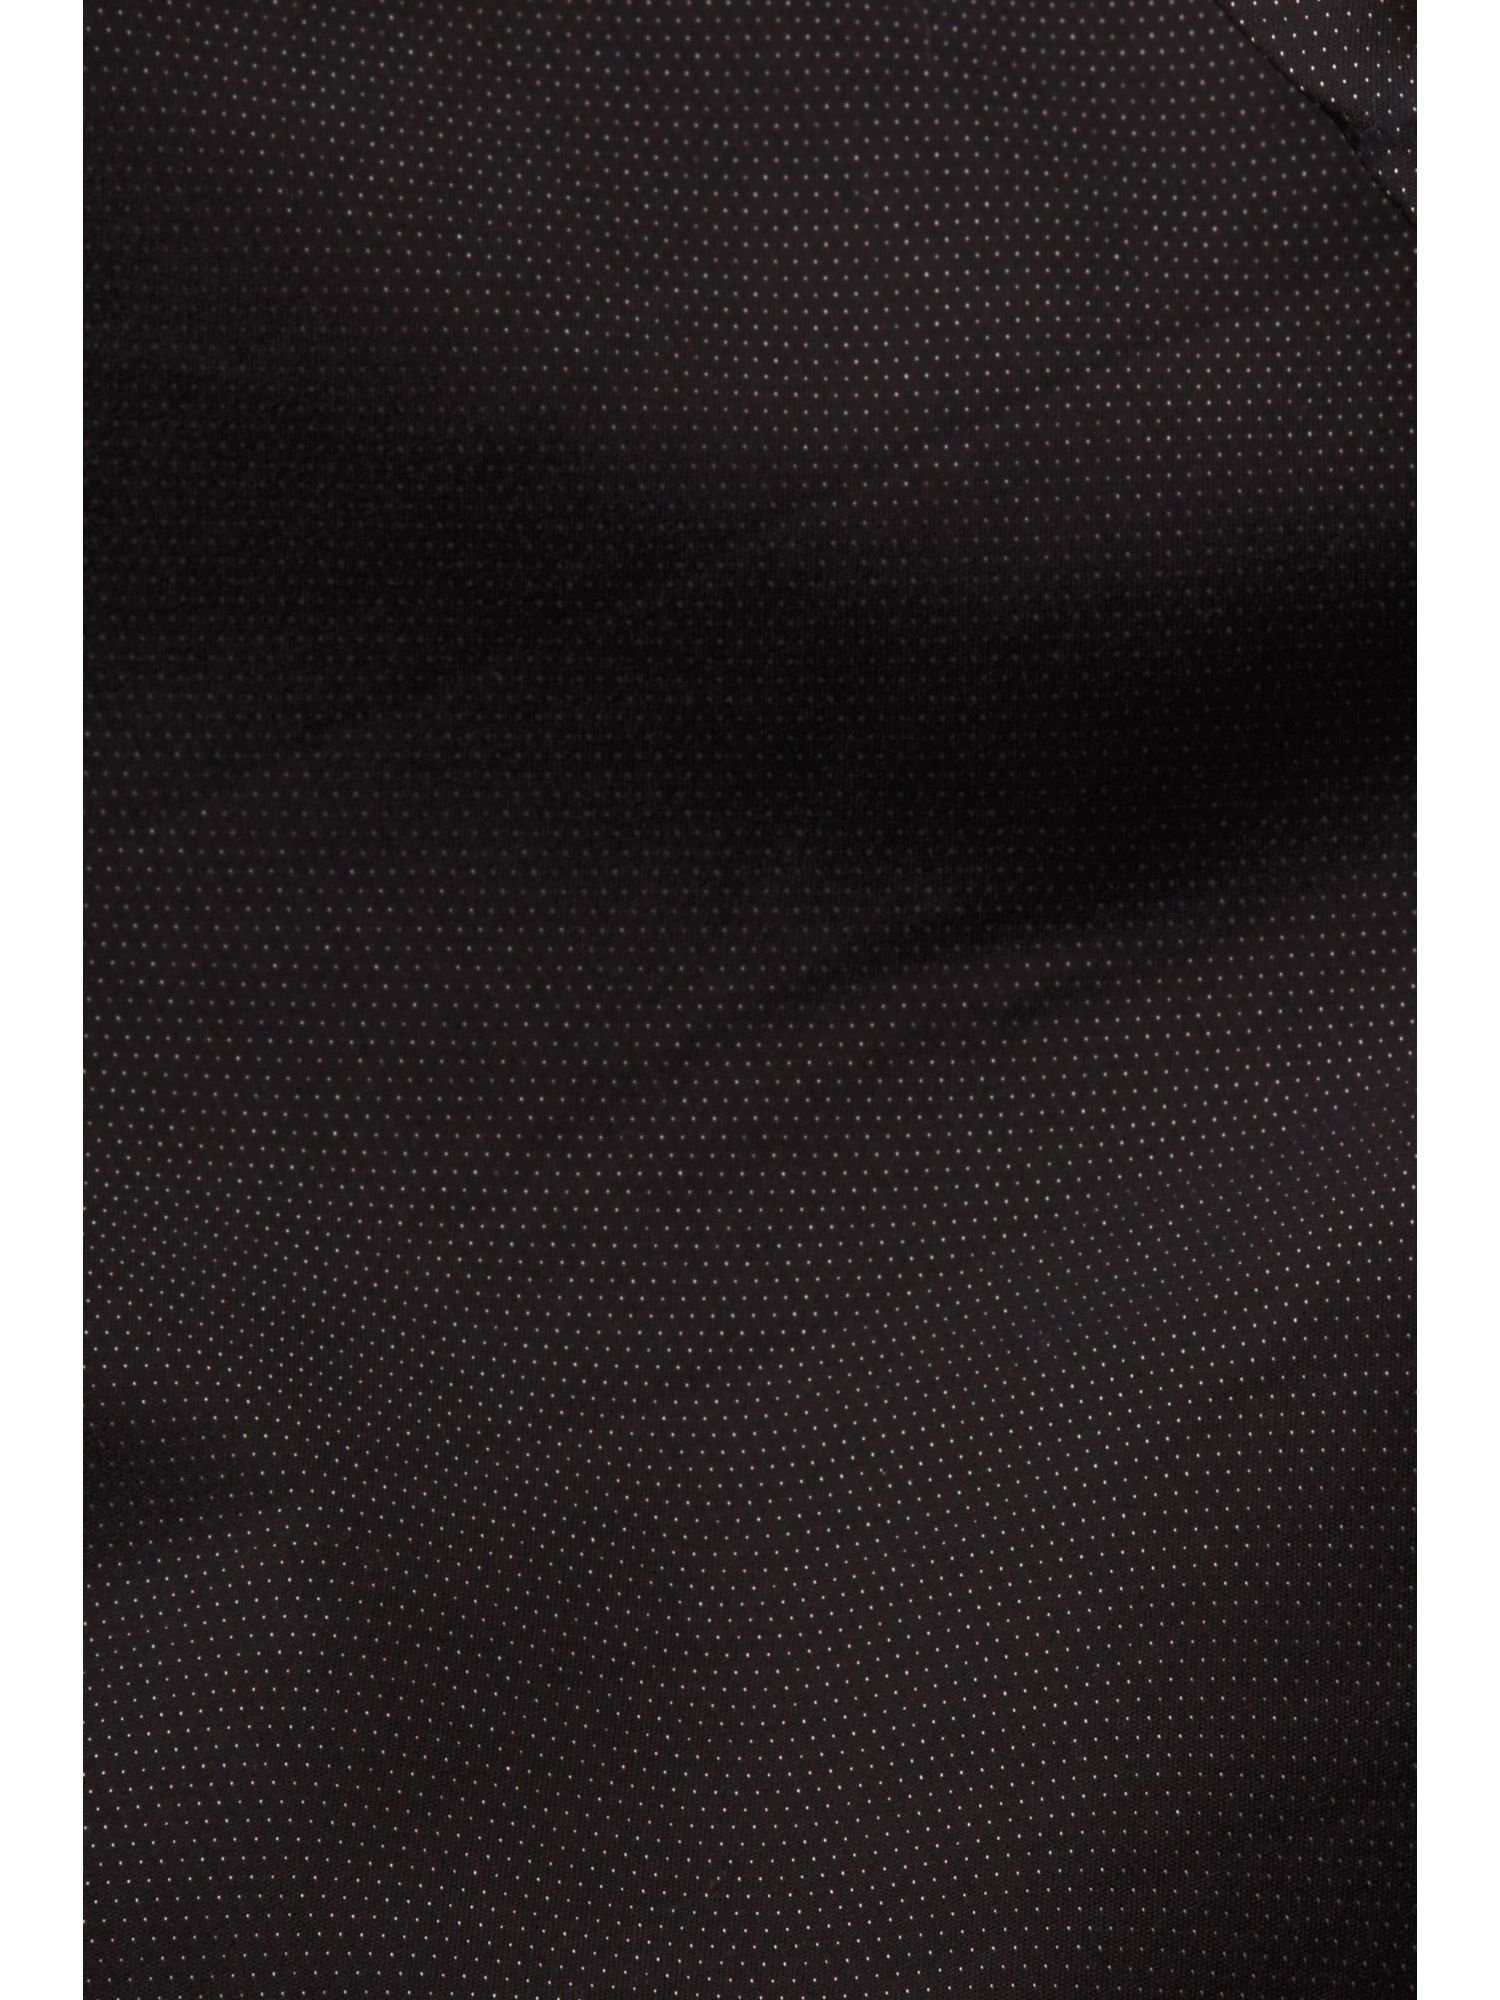 Collection Hose Fit Slim Esprit Anzughose im BLACK